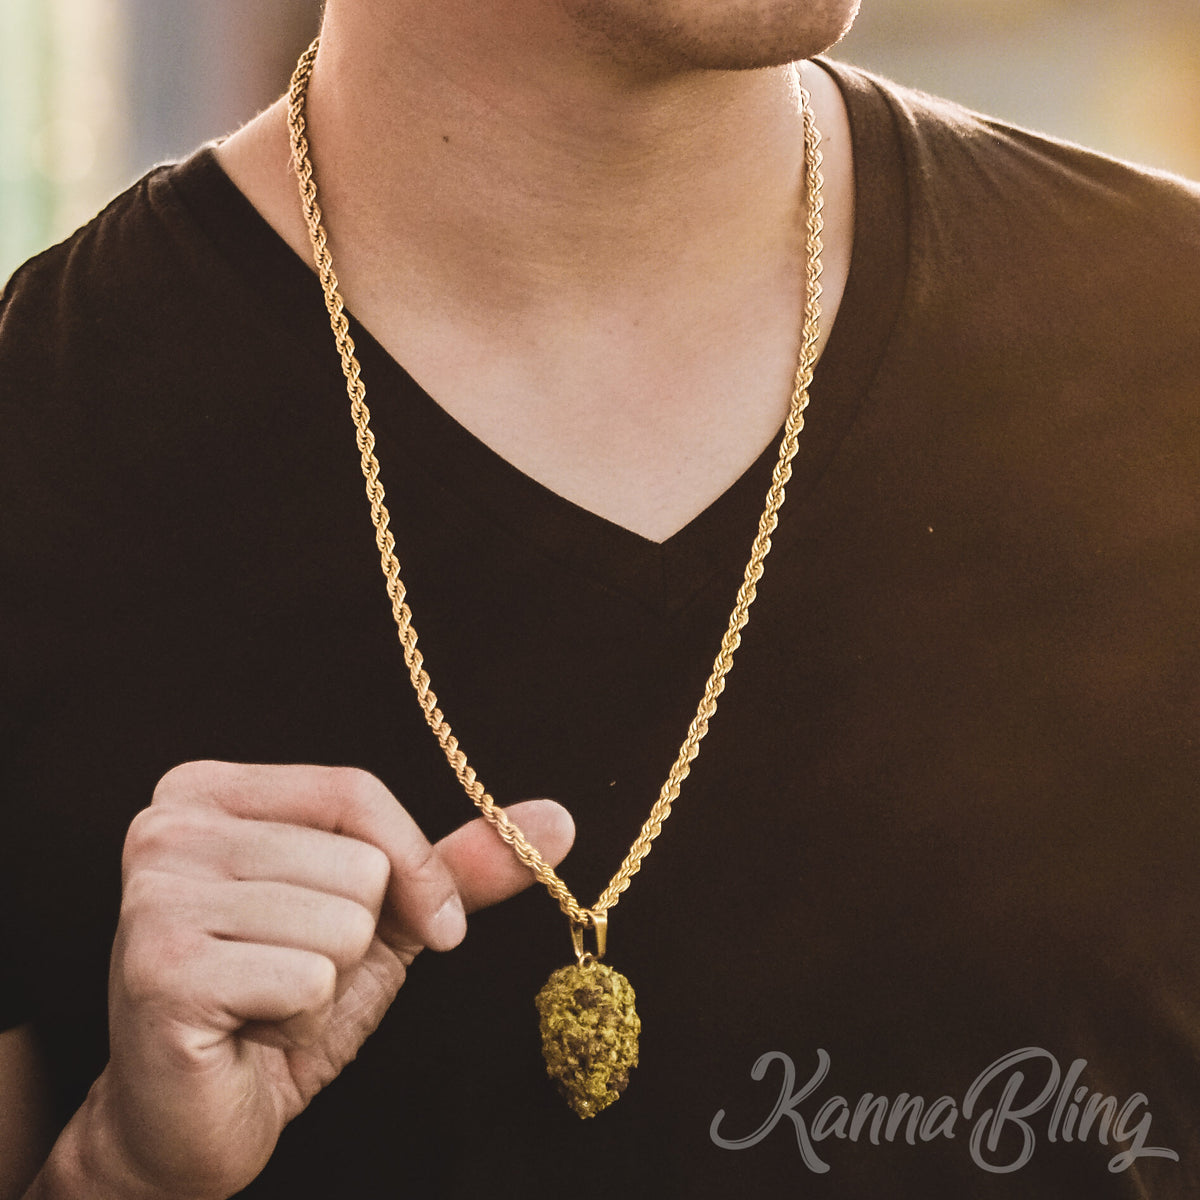 KannaBling - Clipper Lighter Holder Gold Rope Chain Necklace 30